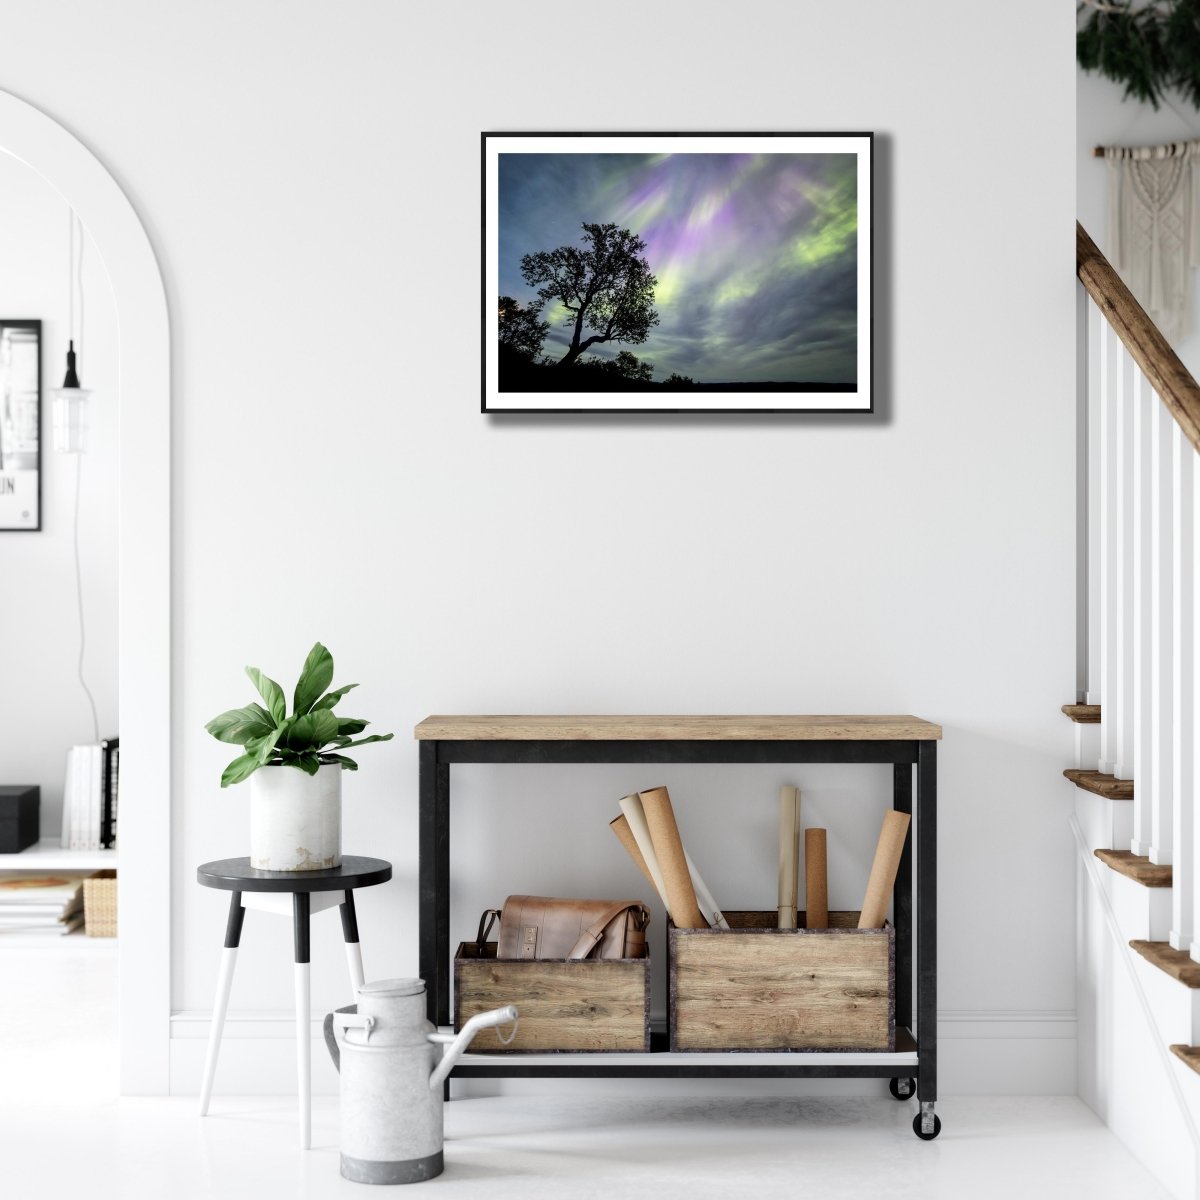 Fine art print of mountain birch tree silhouetted against Auroras, black-framed, on white living room wall above desk.